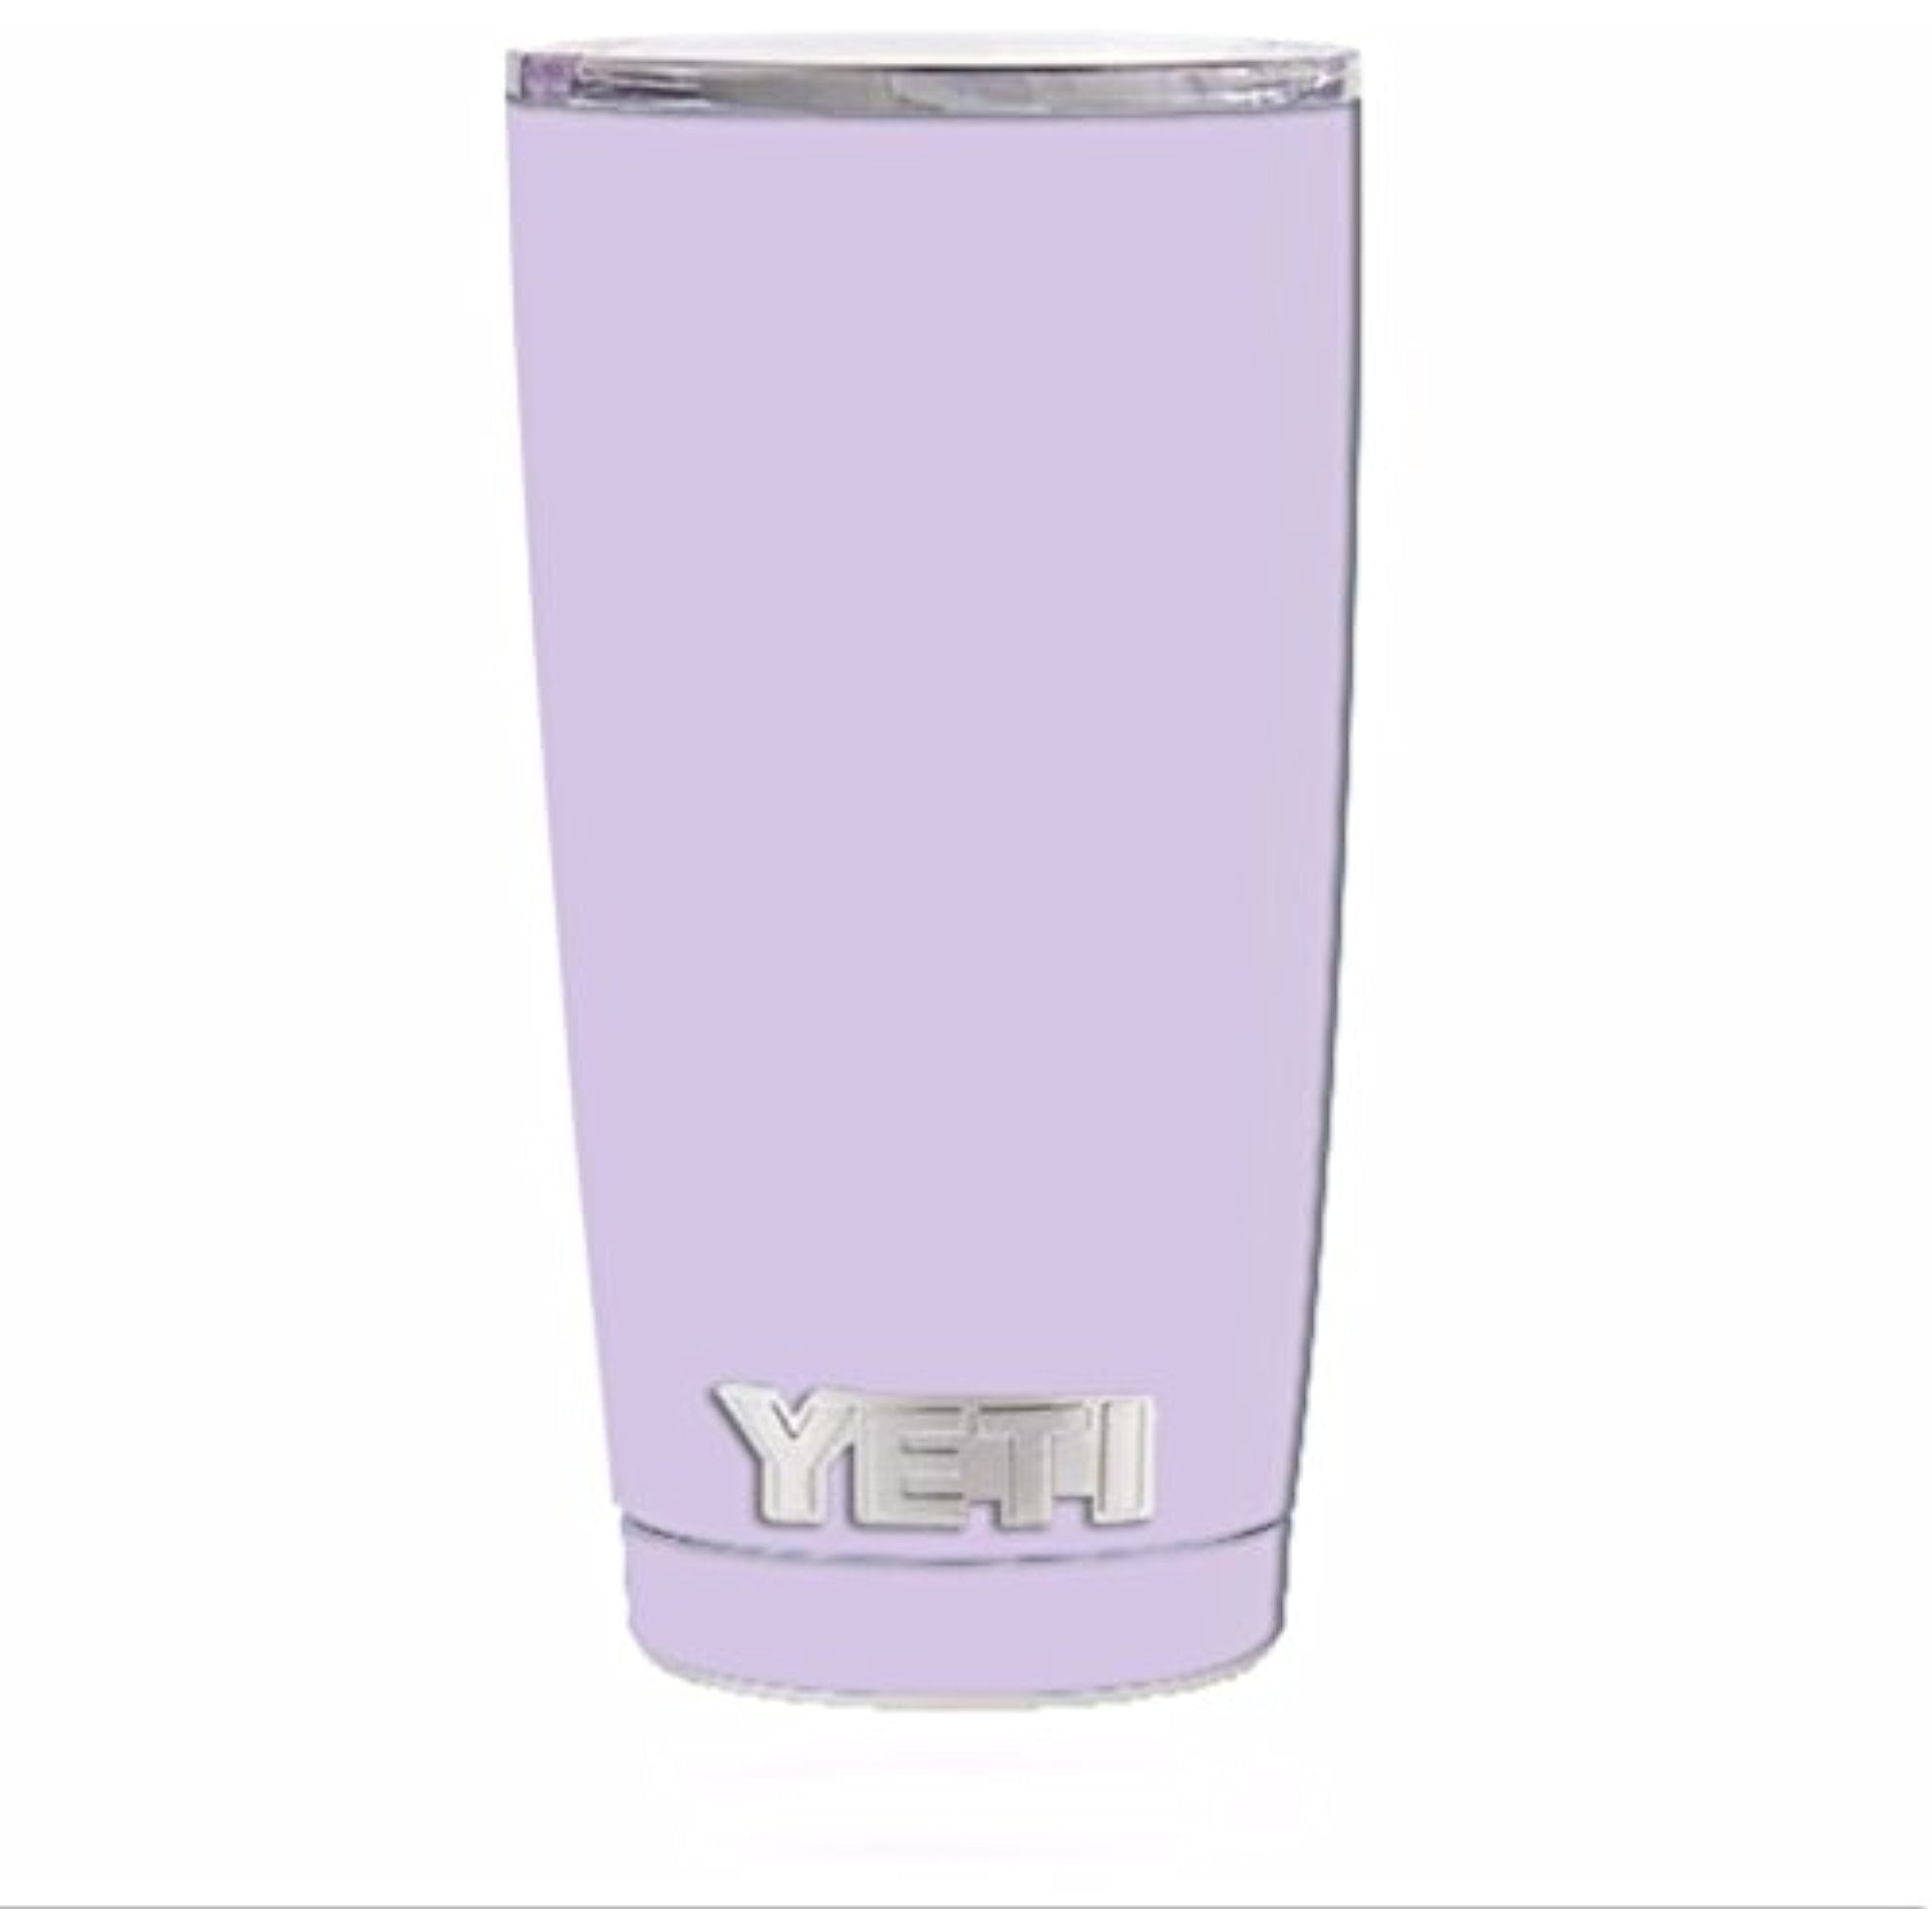 Yeti Skins | Solid Lavender Skin for Yeti Bottle 36 oz | Carbon Fiber | Custom Vinyl Skin Wrap | Mighty Skins